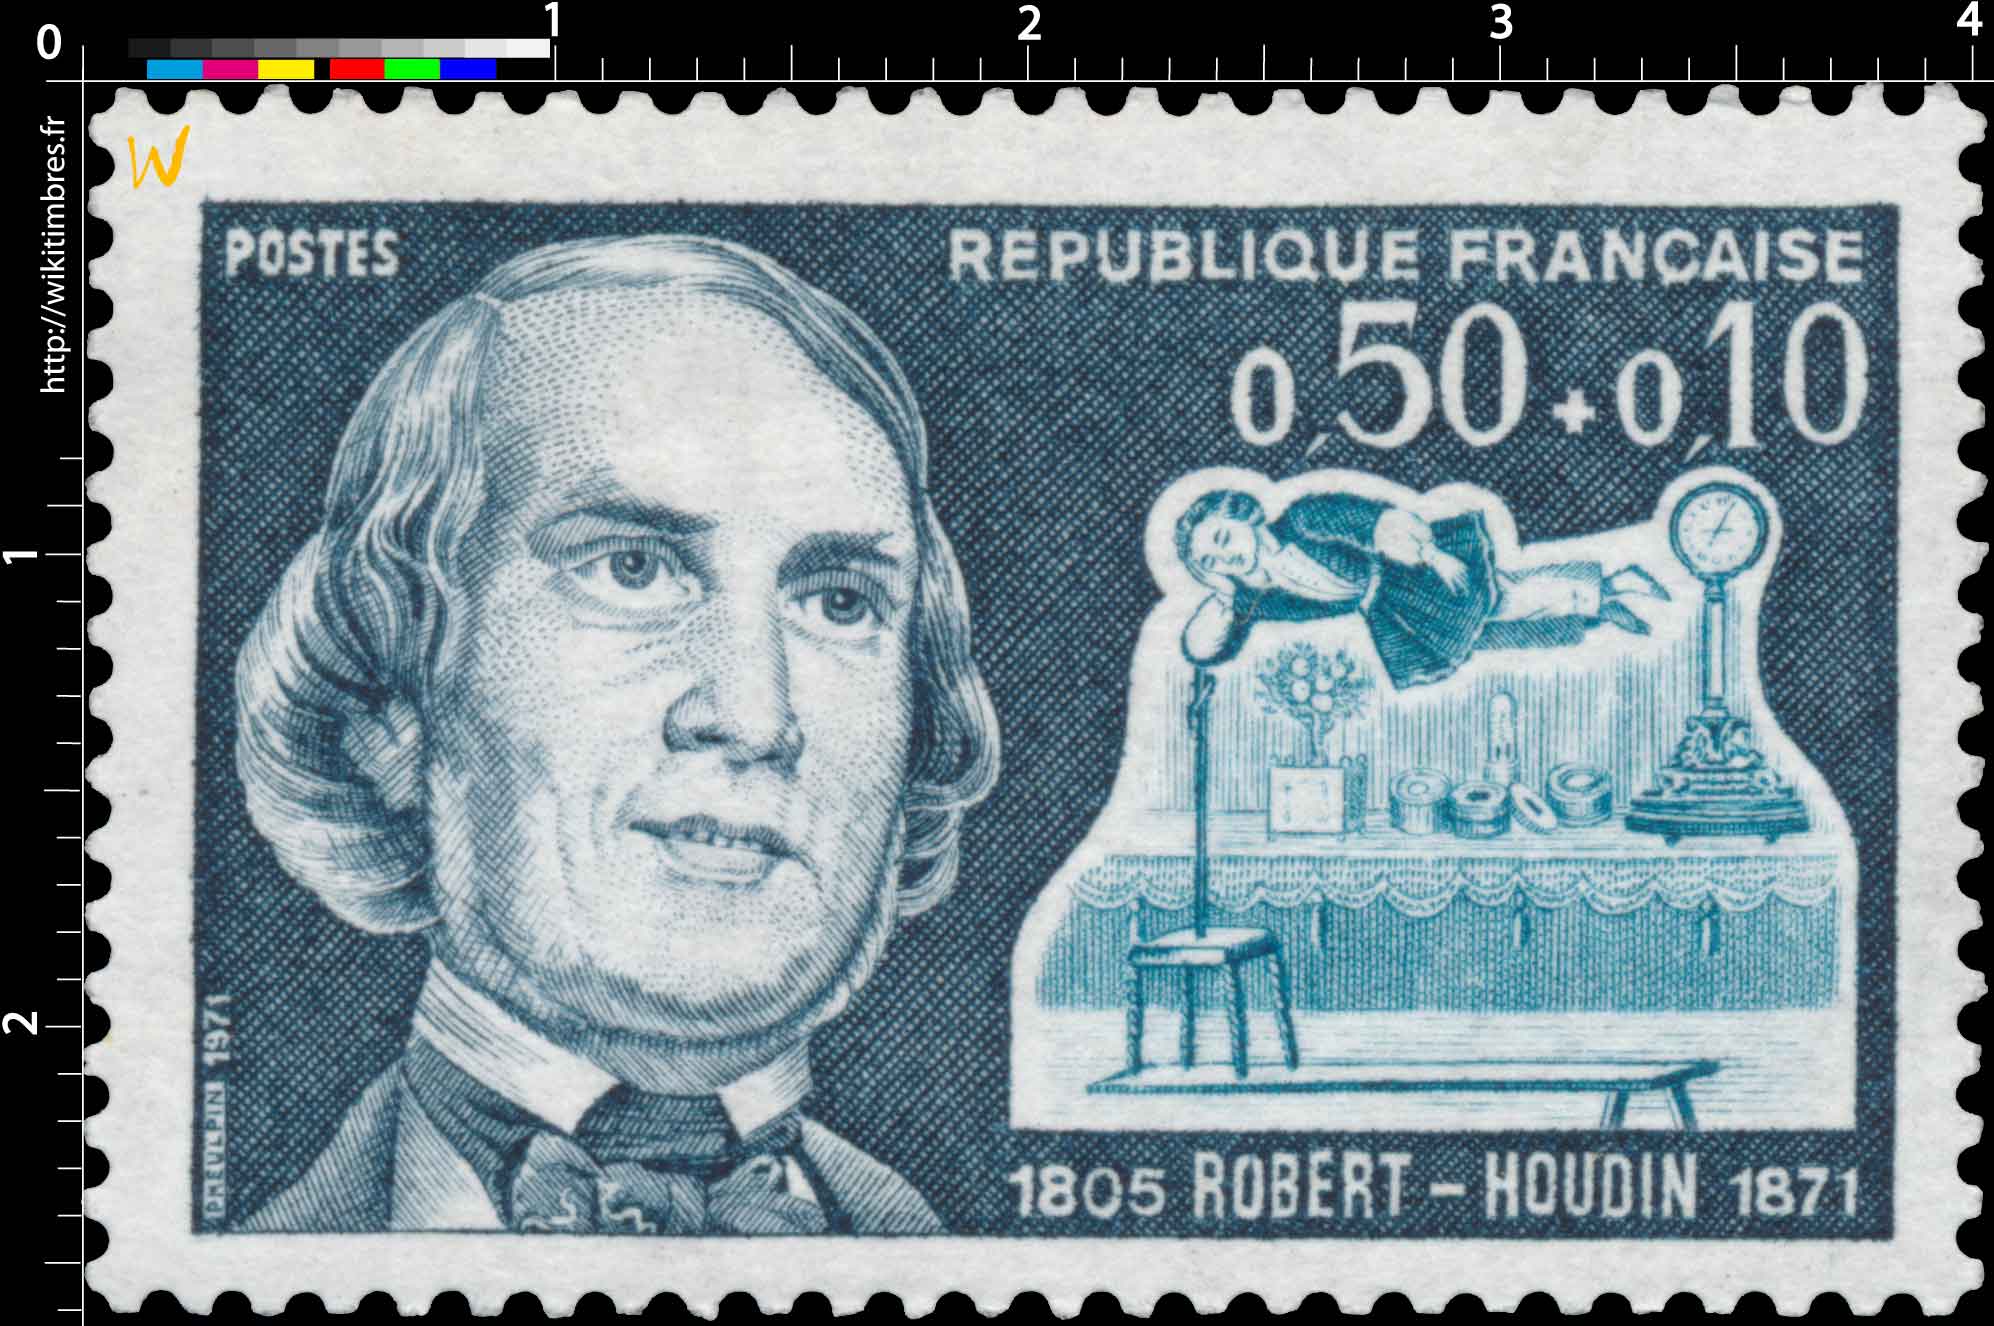 1971 ROBERT - HOUDIN 1805-1871